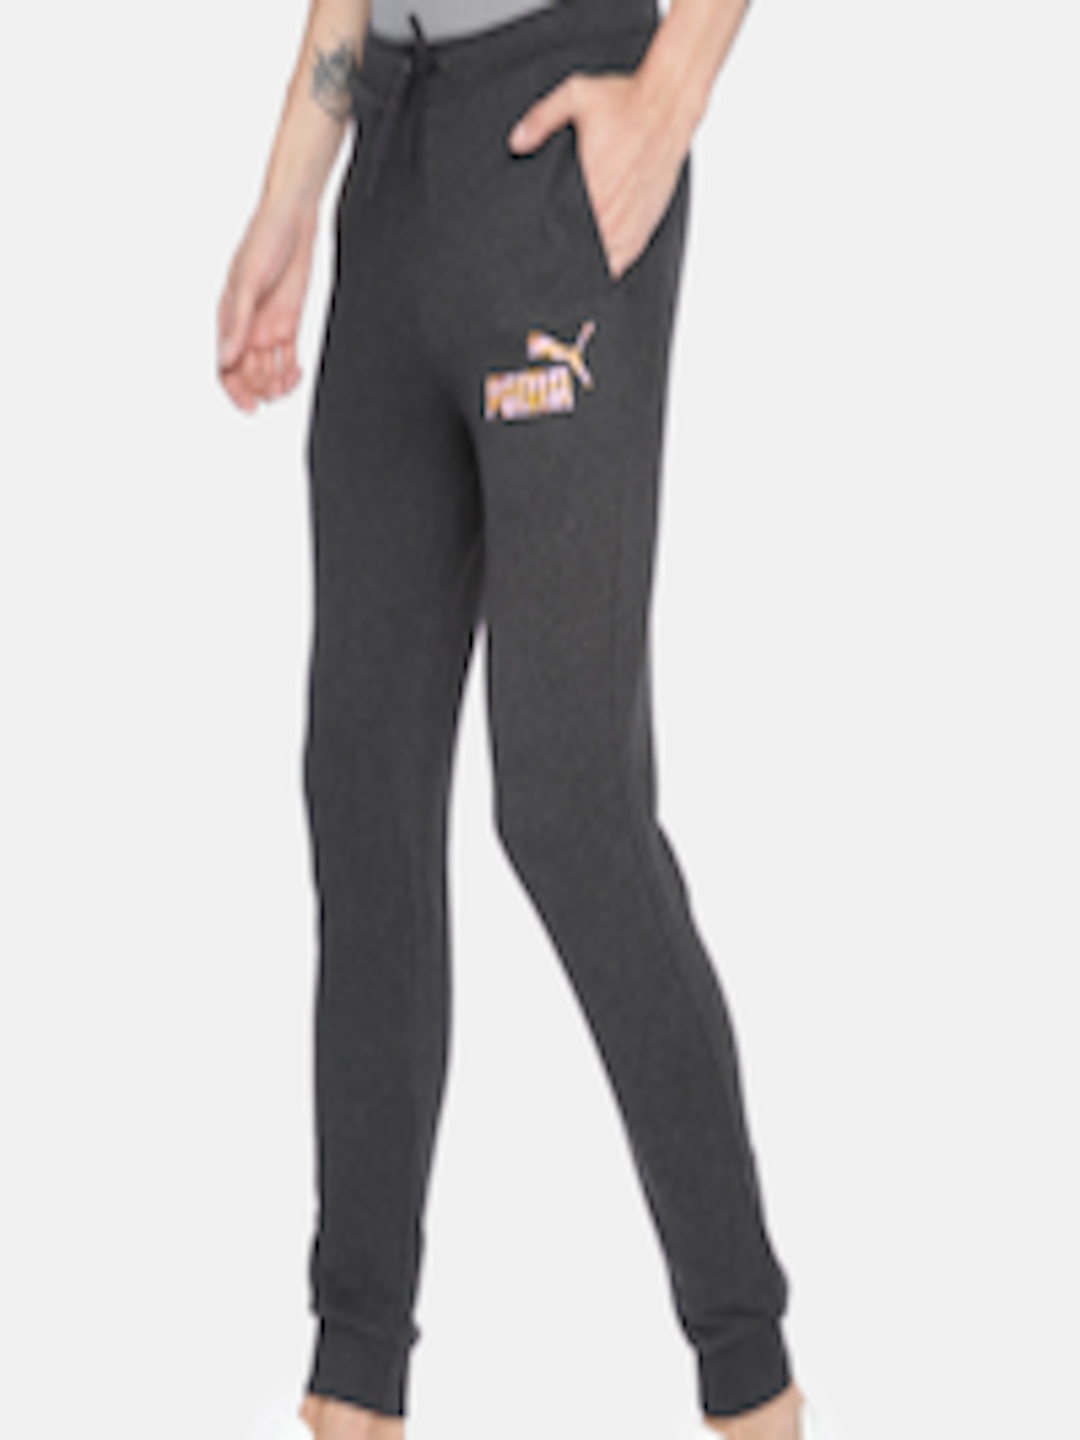 Buy Puma Men Charcoal Grey Graphic Pants Cl I Joggers Track Pants For Men 7748785 Myntra